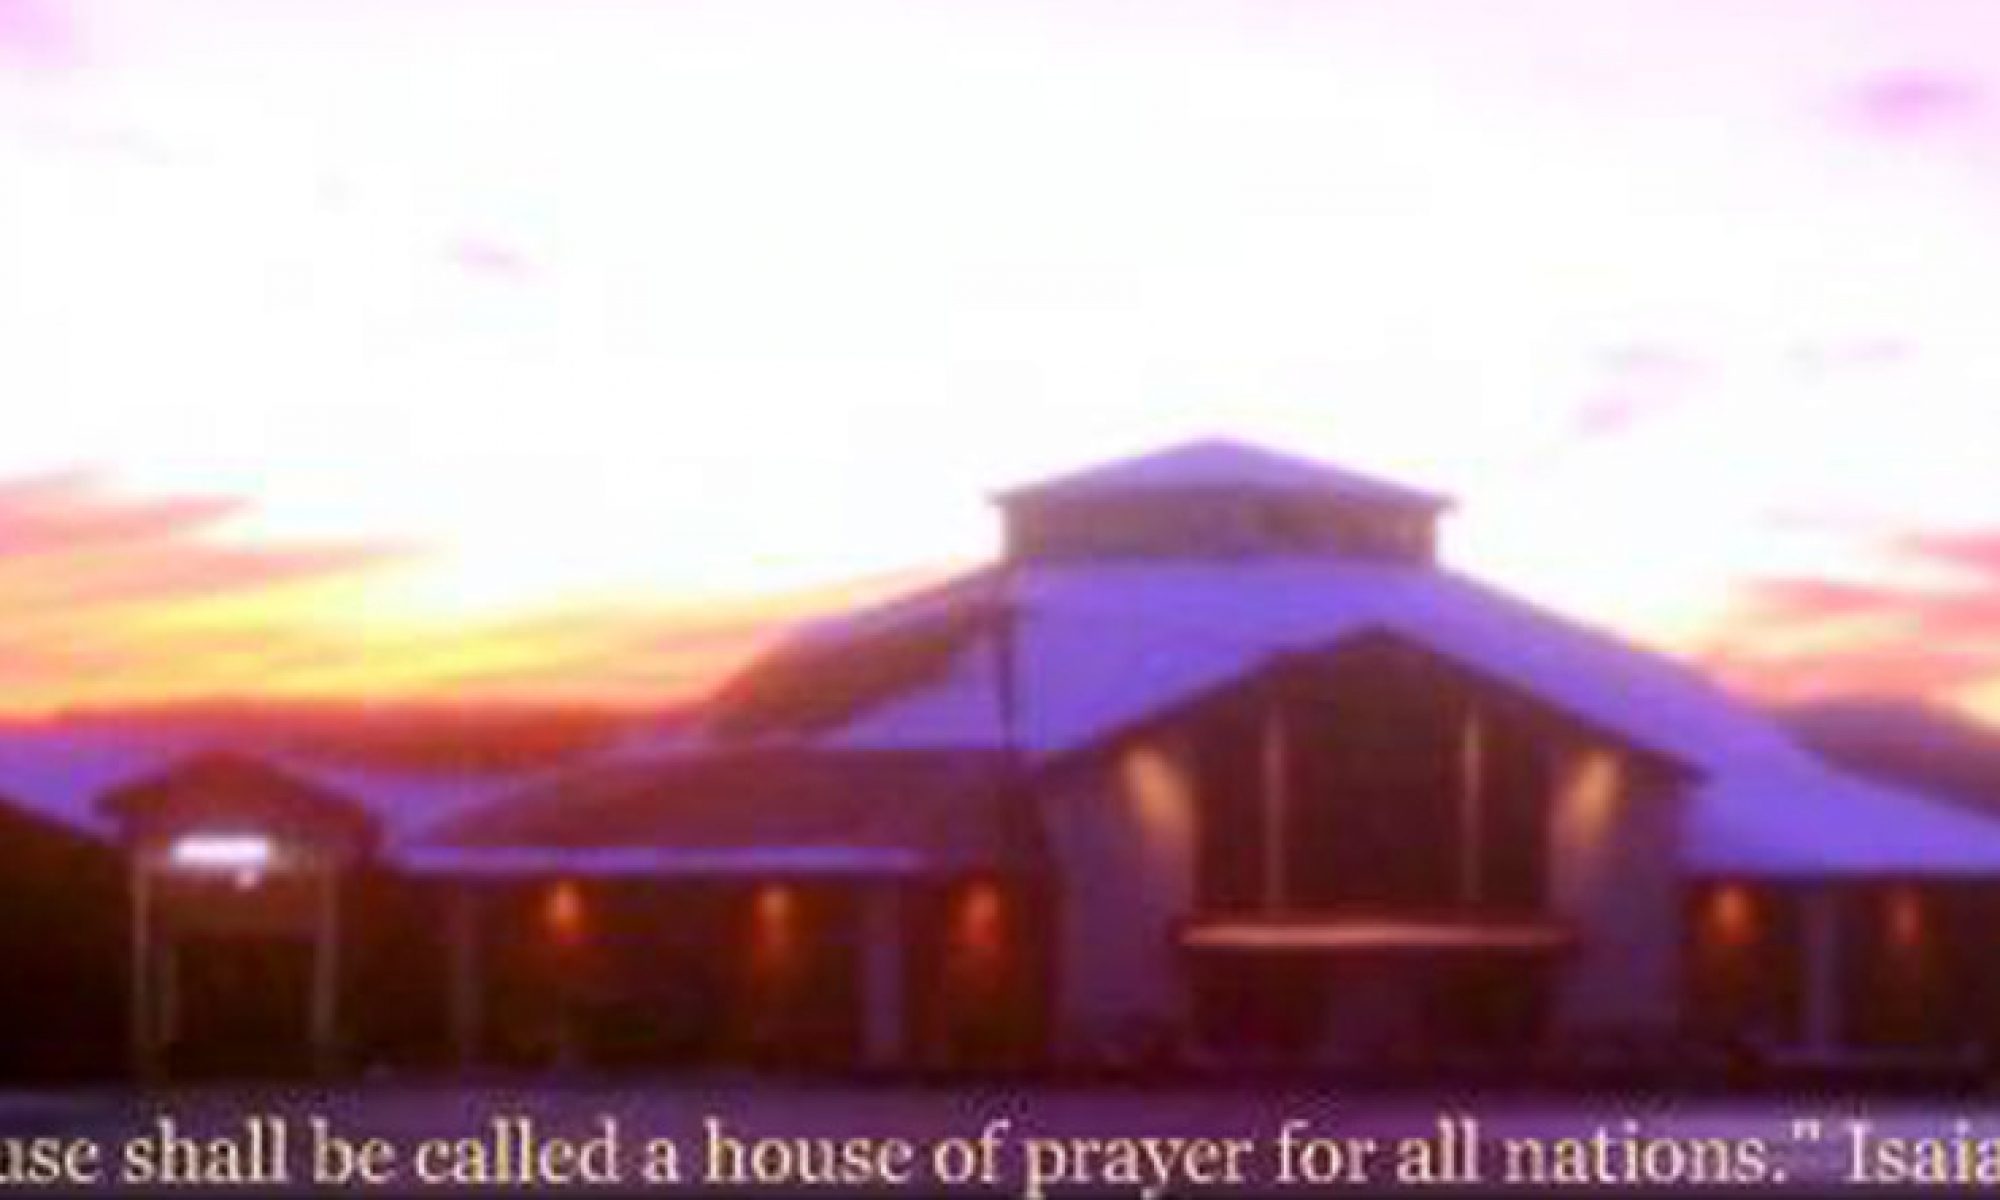 Mountain View Church of God